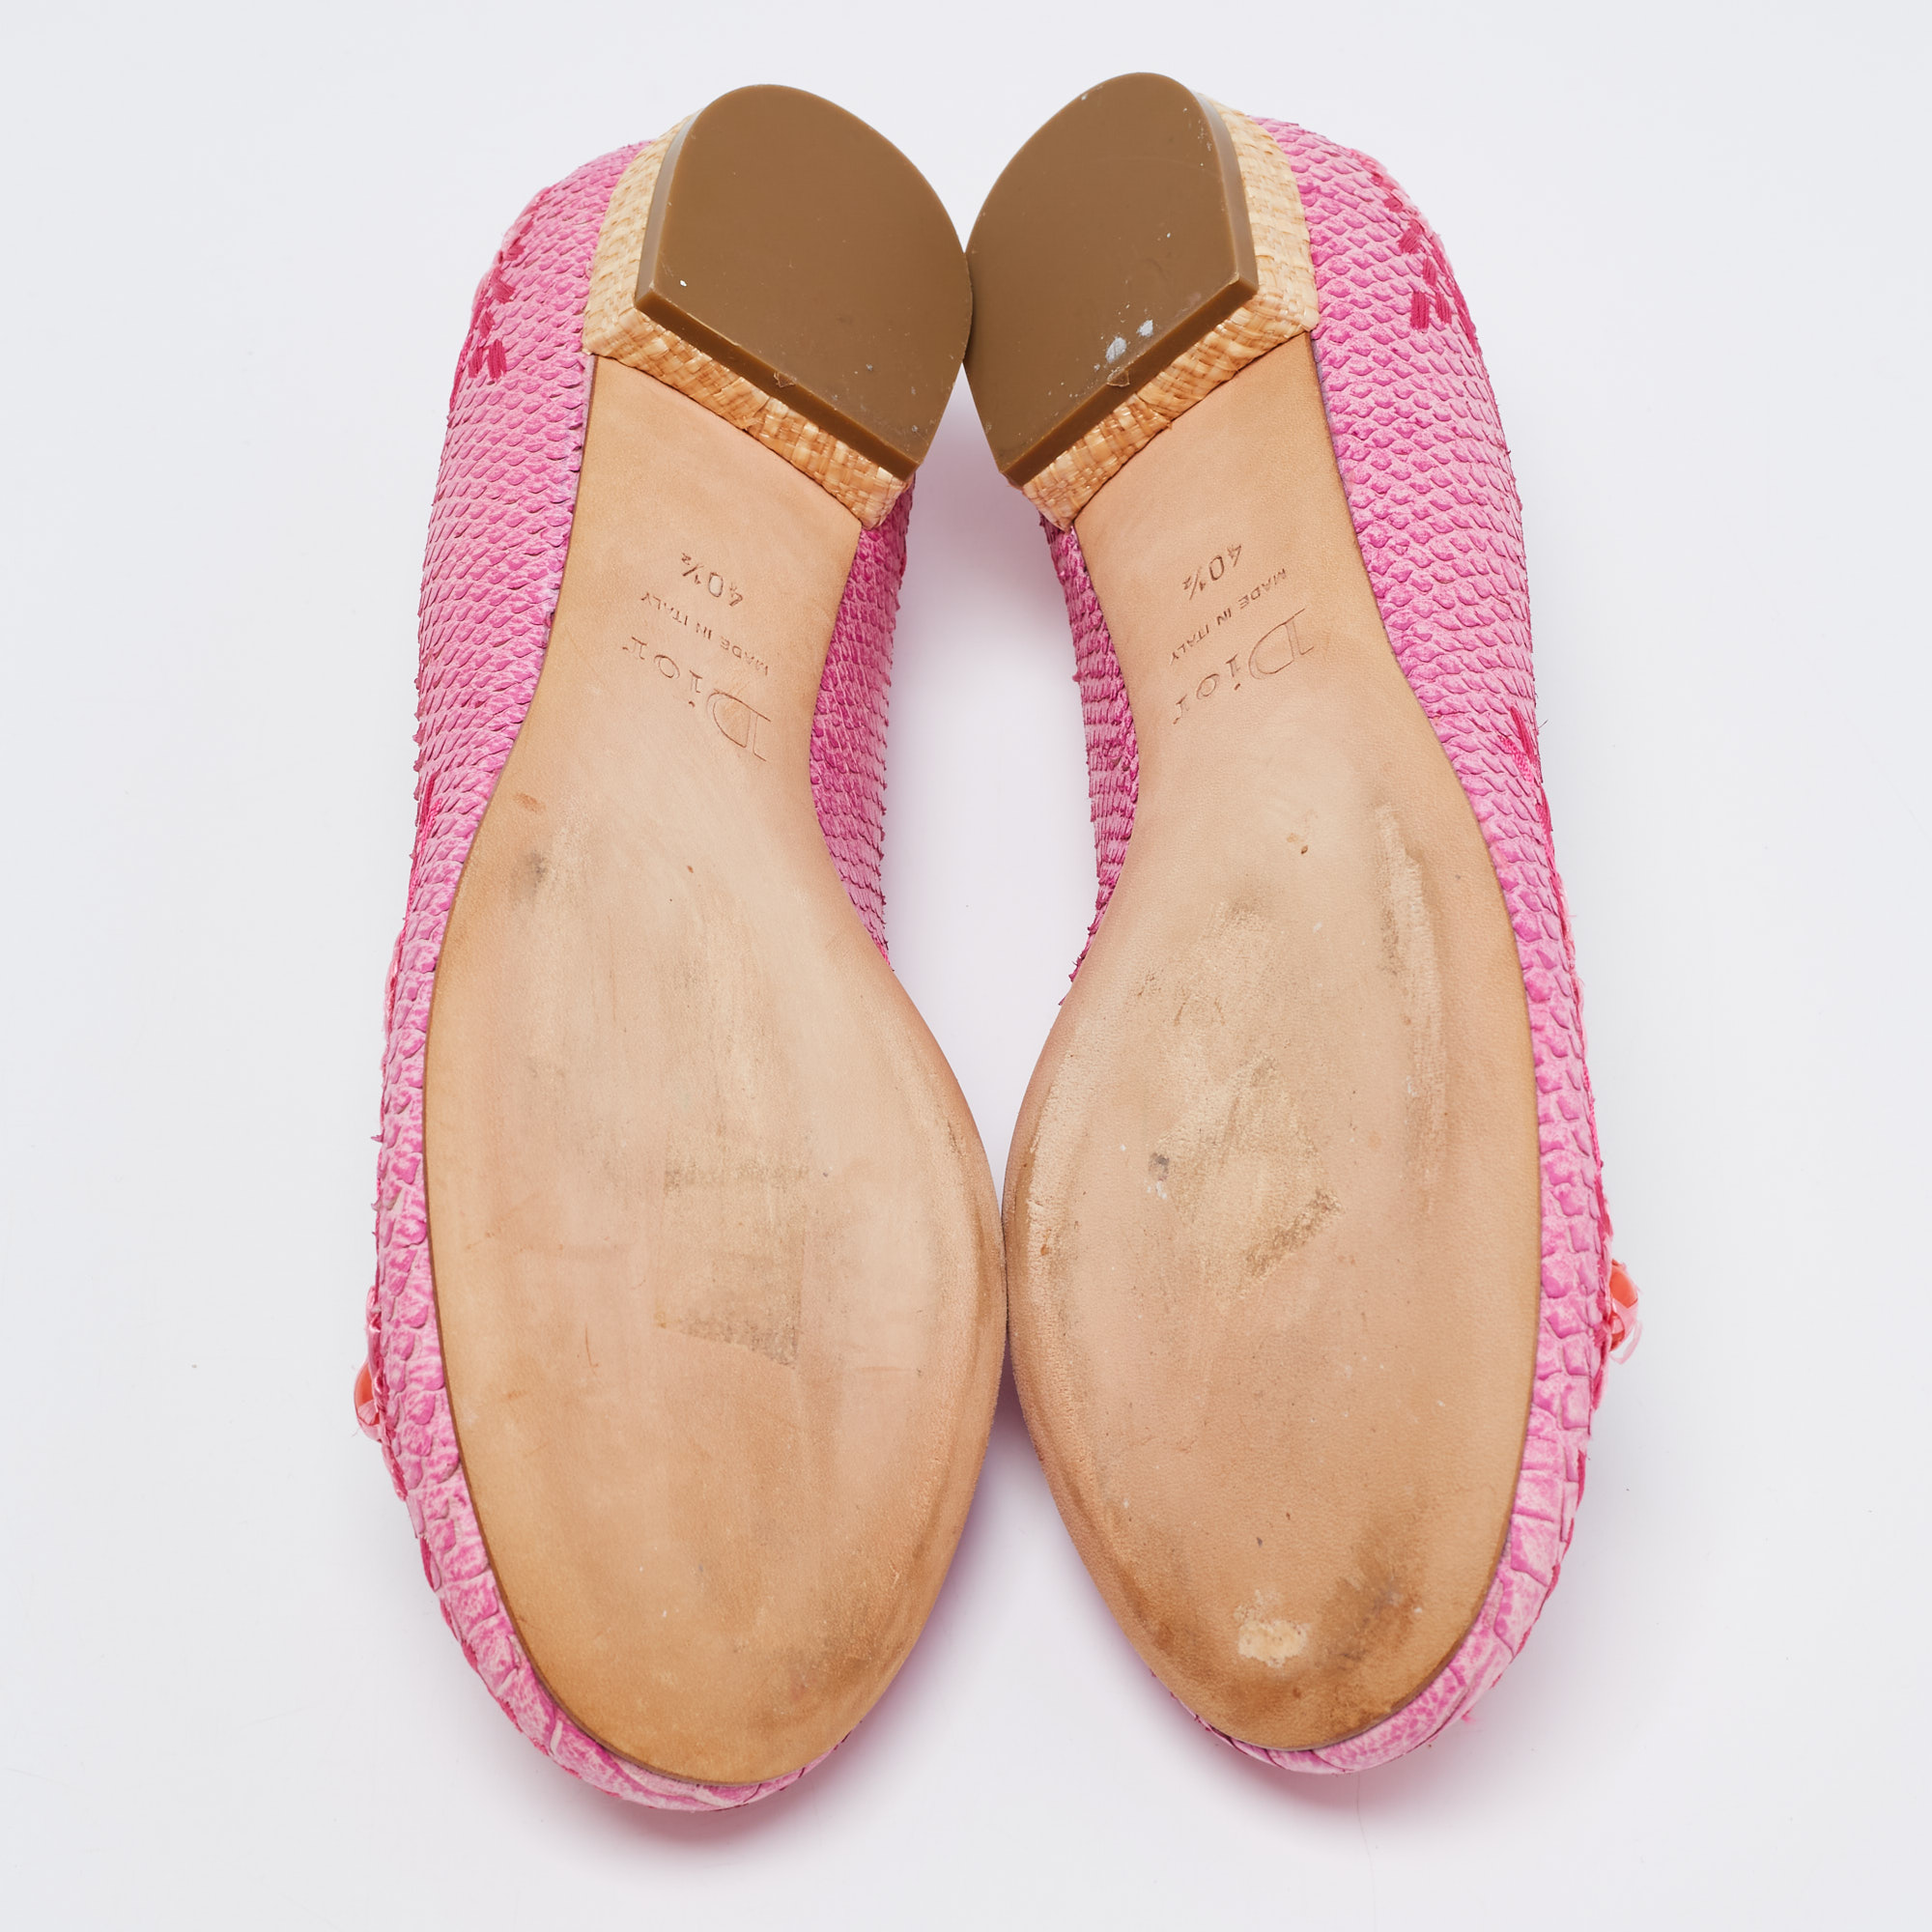 Dior Pink Python Leather Floral Raffia Ballet Flats Size 40.5